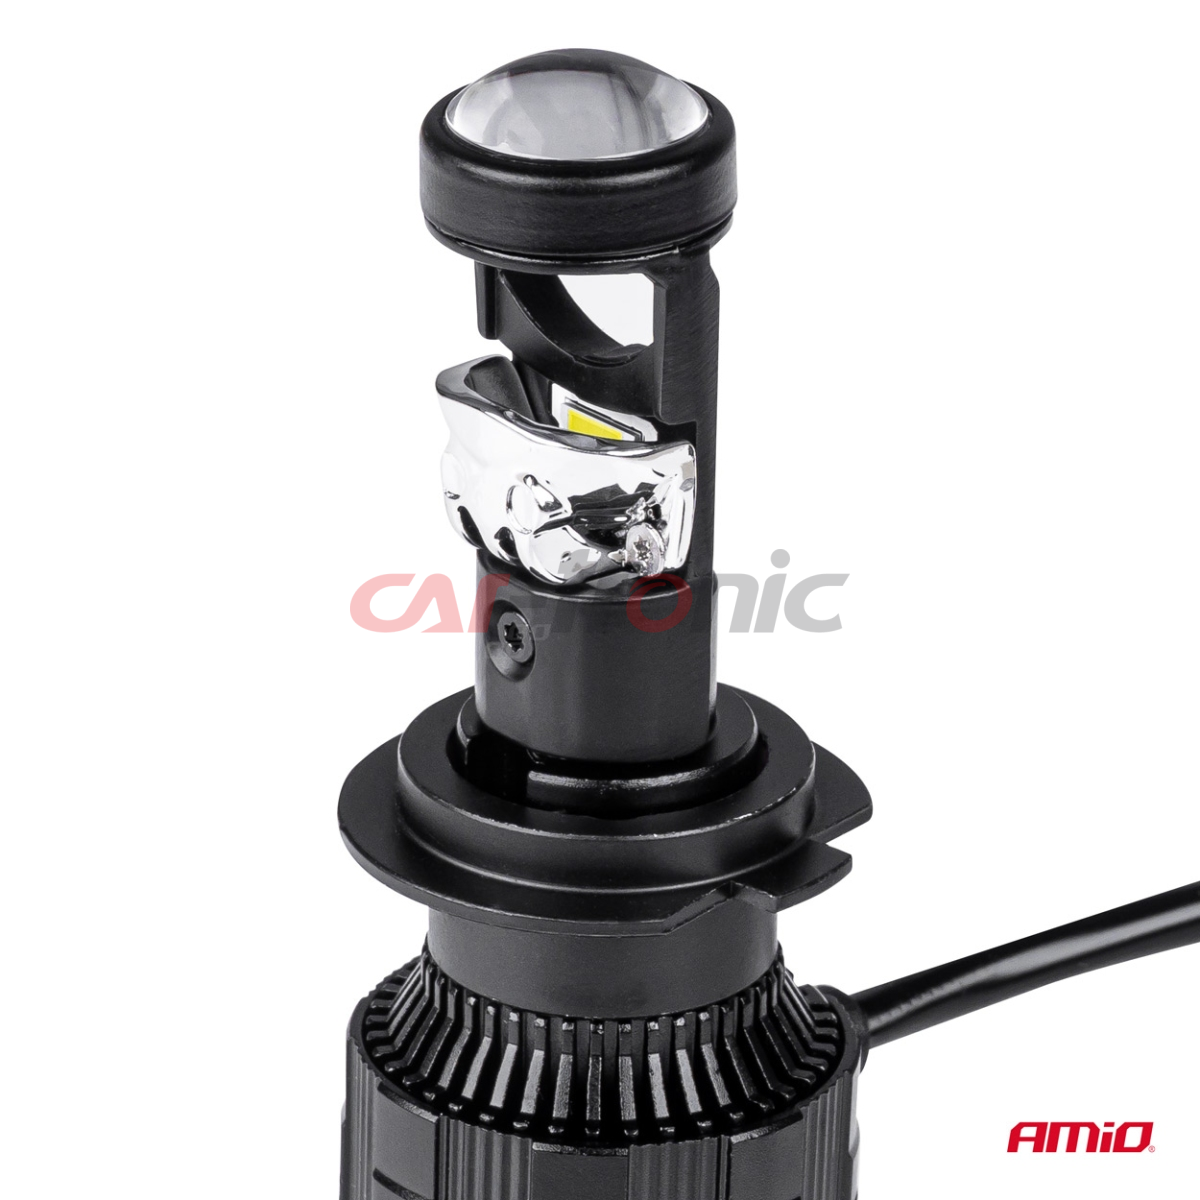 Żarówki samochodowe LED seria PL Lens H7/H18 soczewka 6000K Canbus AMIO-03668